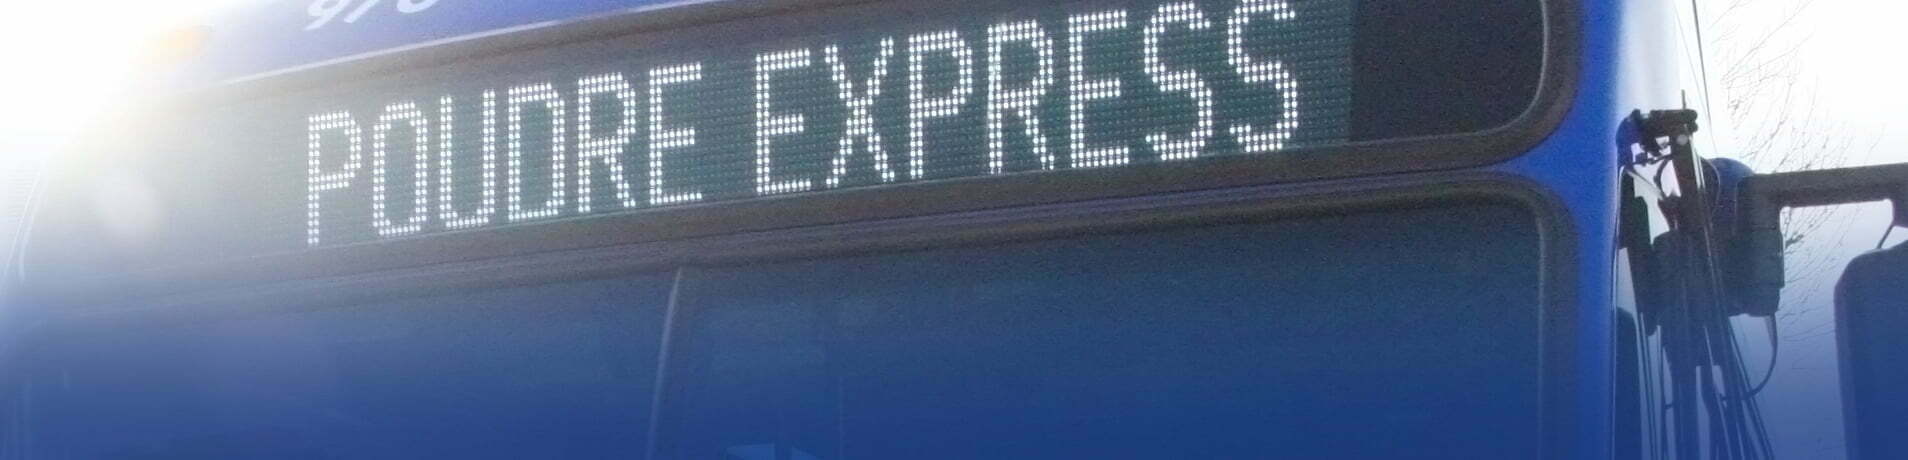 Poudre Express header